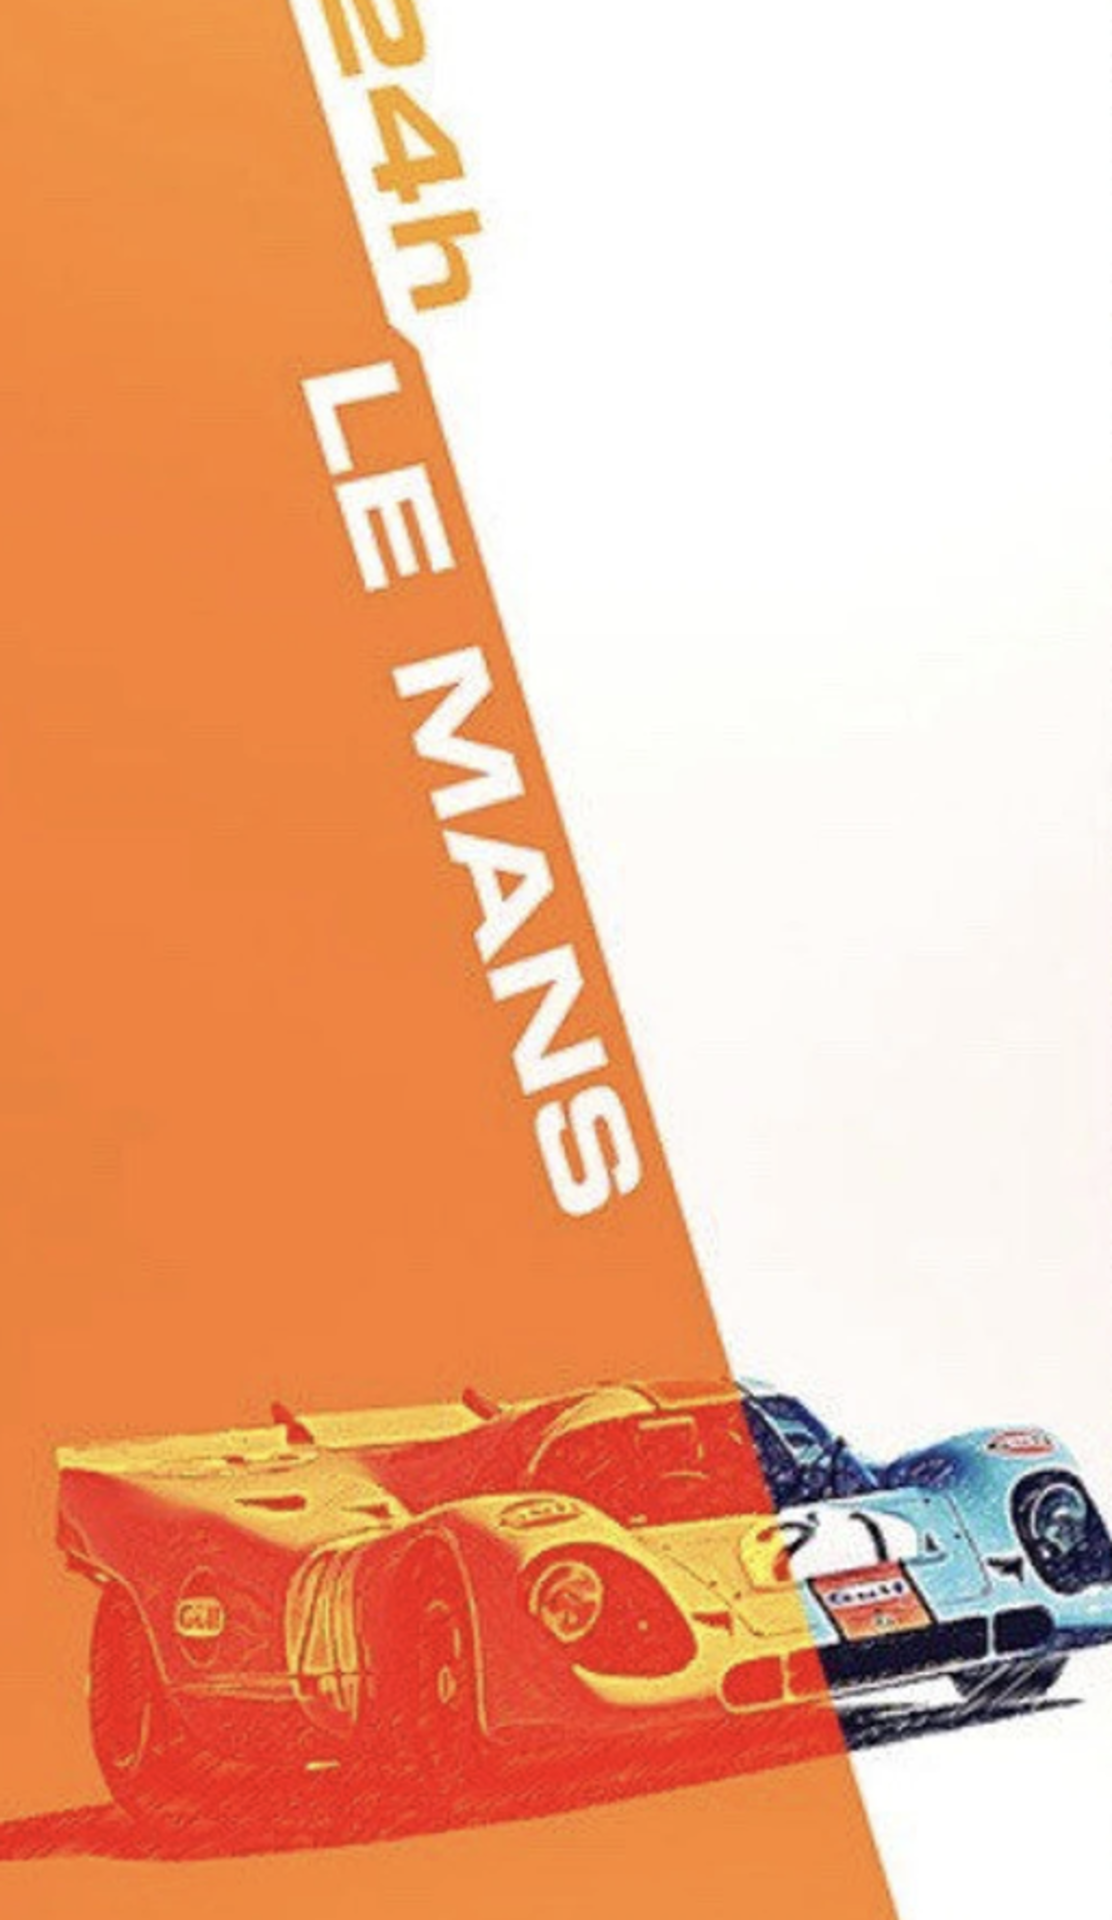 Steve McQueen 24 Hours of Le Mans Aluminum Garage Display - Image 2 of 3